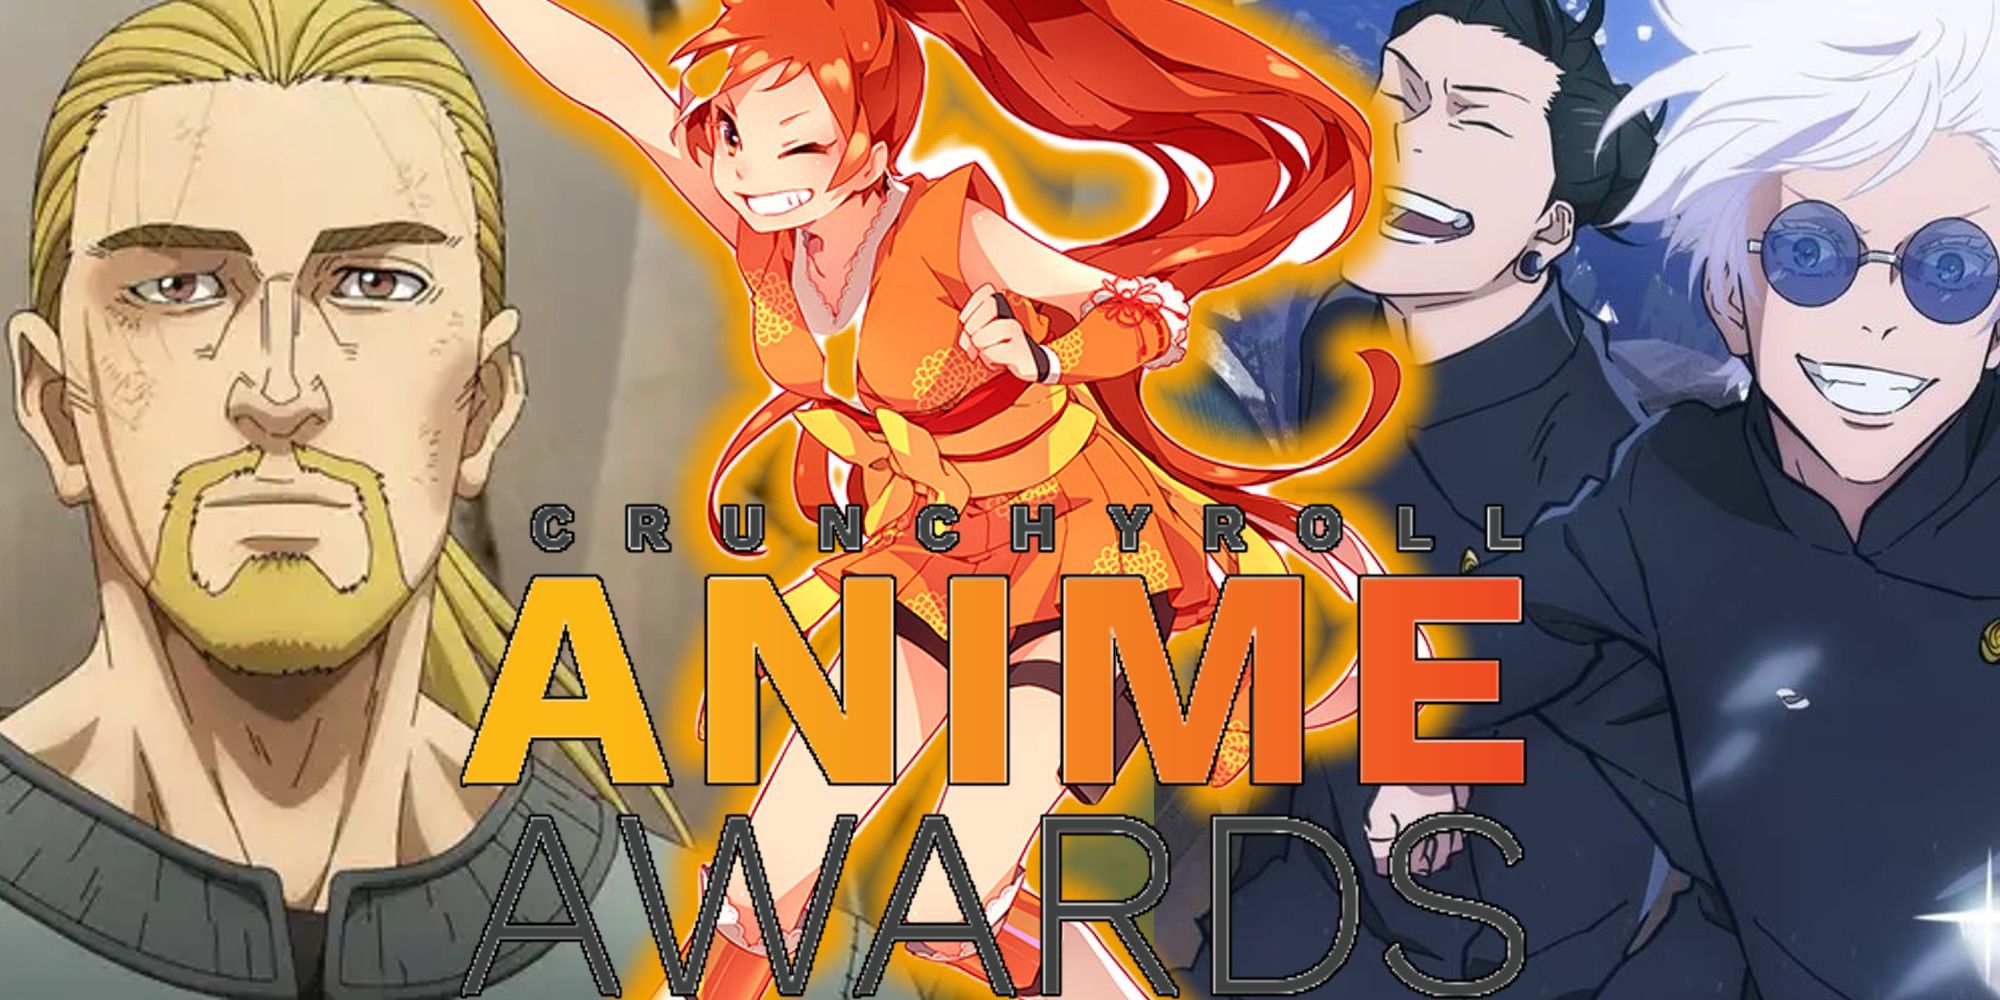 Crunchyroll Anime Awards: 'Jujutsu Kaisen' wins top honors - SSZEE MEDIA